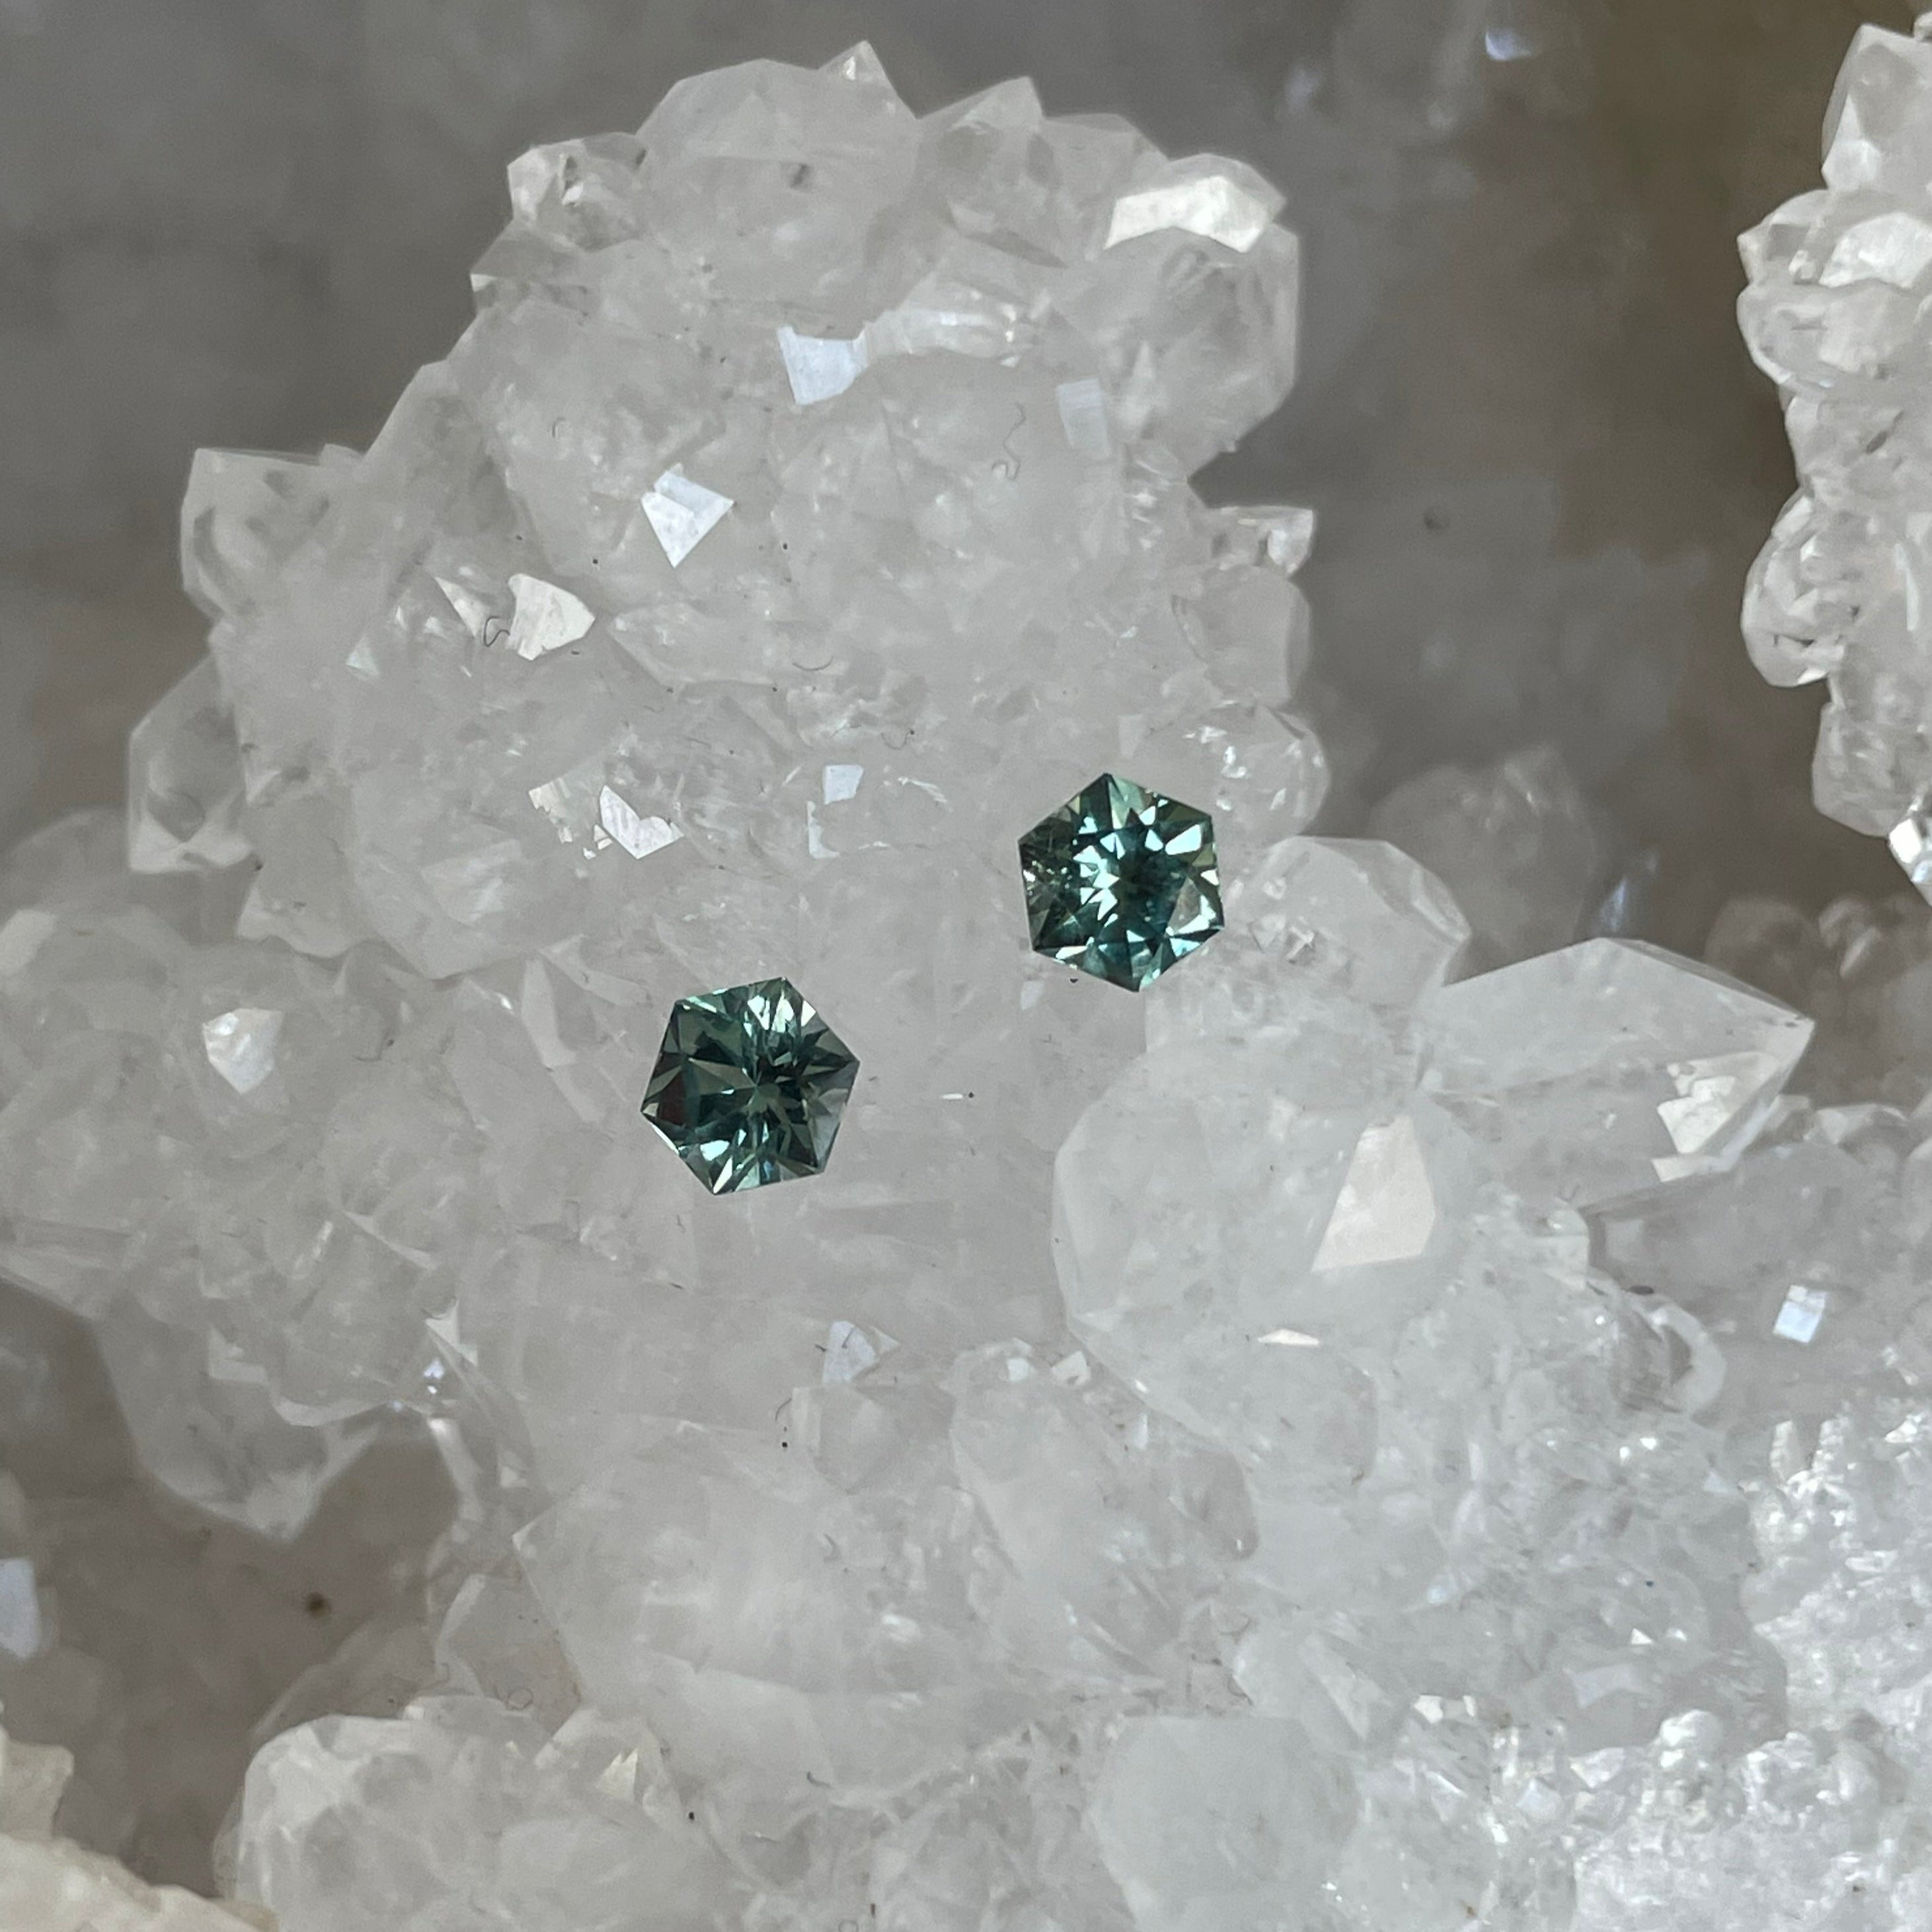 Paired - Montana Sapphire Complimentary Pair 1.04 CTW Green Blue Hexagon Cut